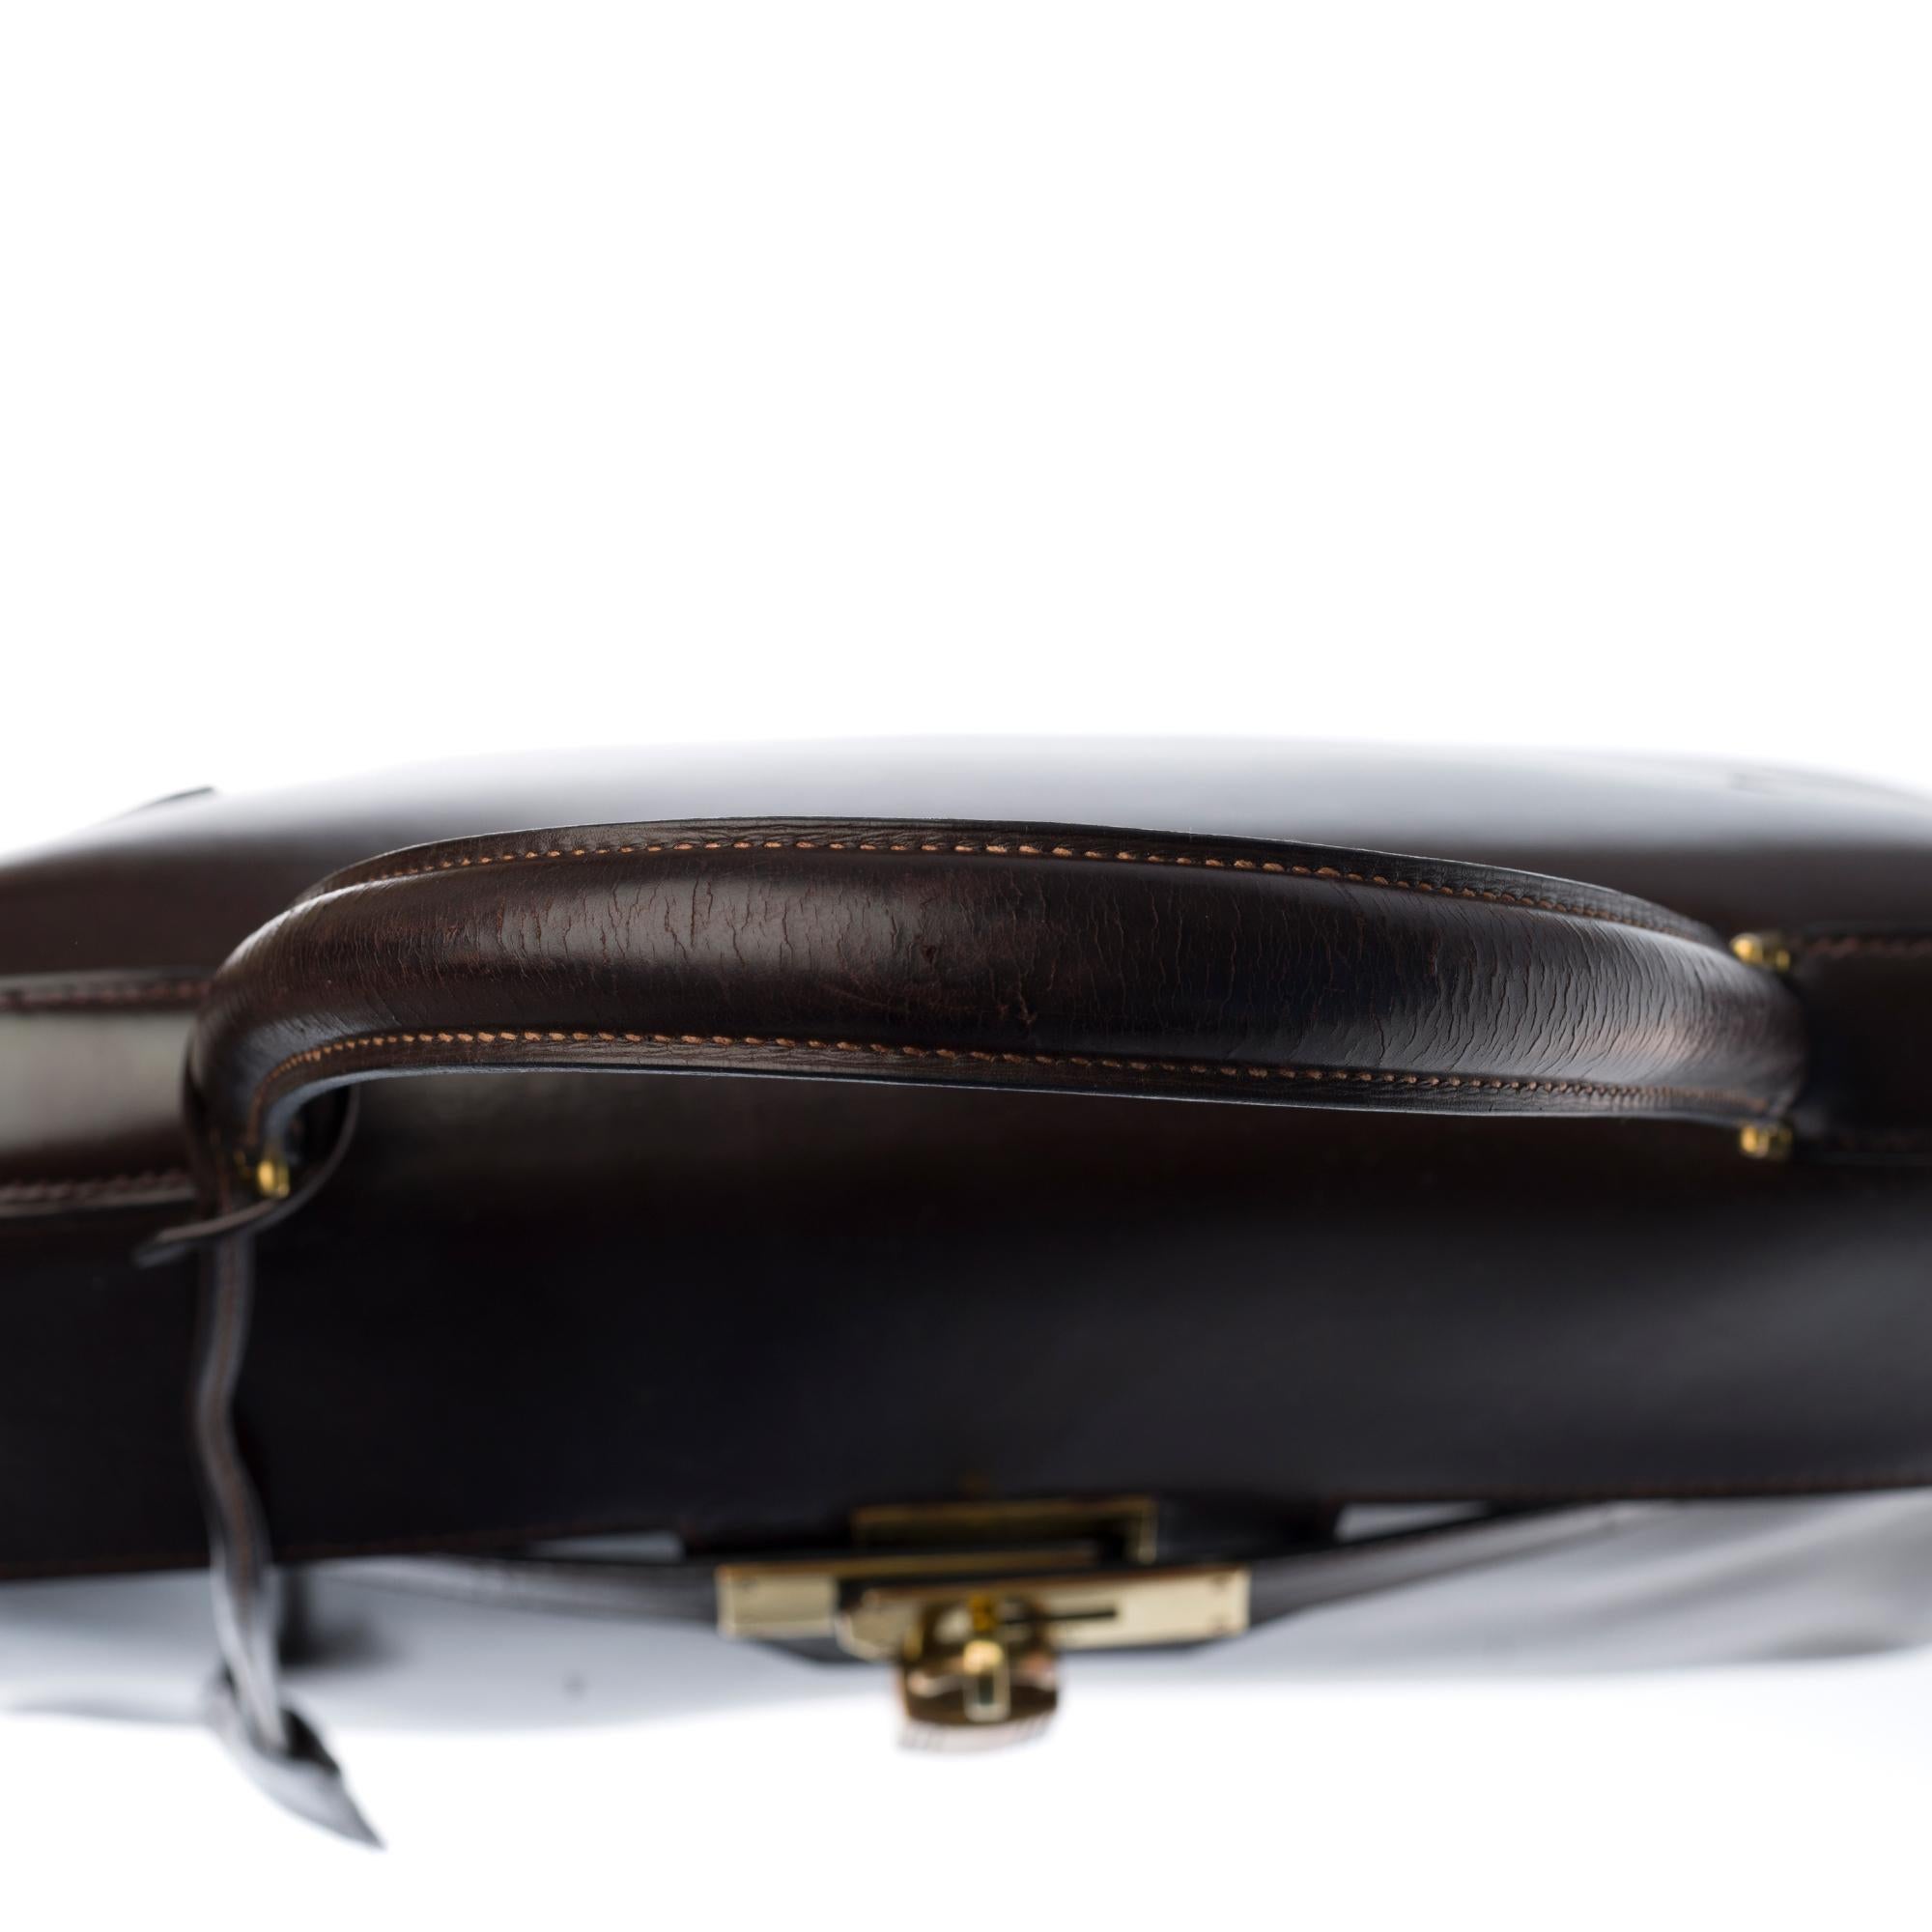 Women's RARE Hermès Kelly Monaco 30cm handbag in brown box calfskin with Gold hardware